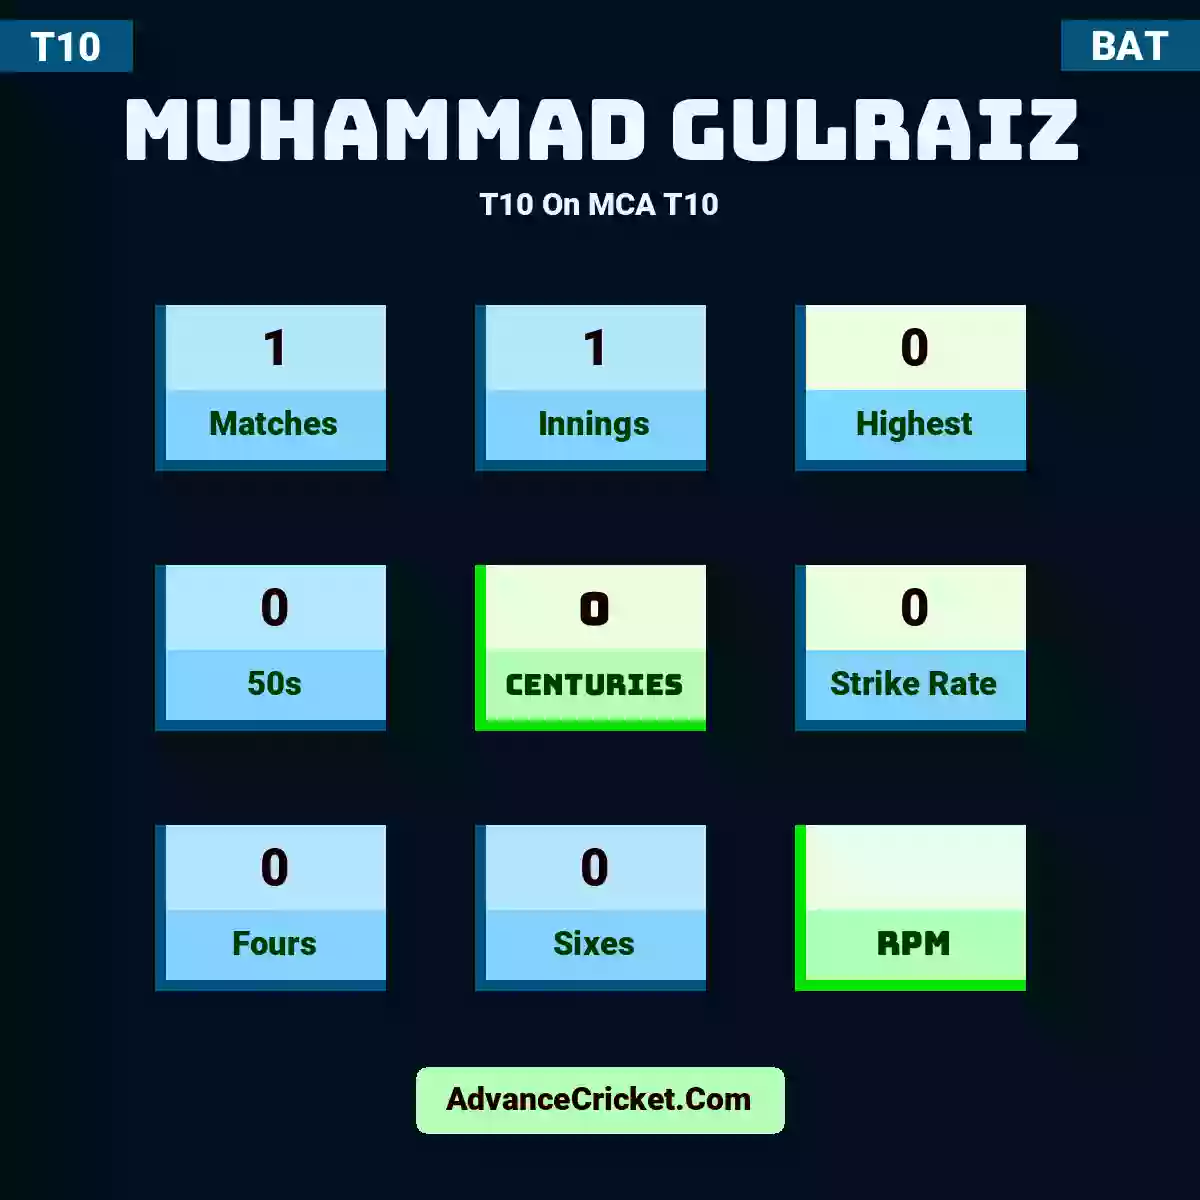 Muhammad Gulraiz T10  On MCA T10, Muhammad Gulraiz played 1 matches, scored 0 runs as highest, 0 half-centuries, and 0 centuries, with a strike rate of 0. M.Gulraiz hit 0 fours and 0 sixes.